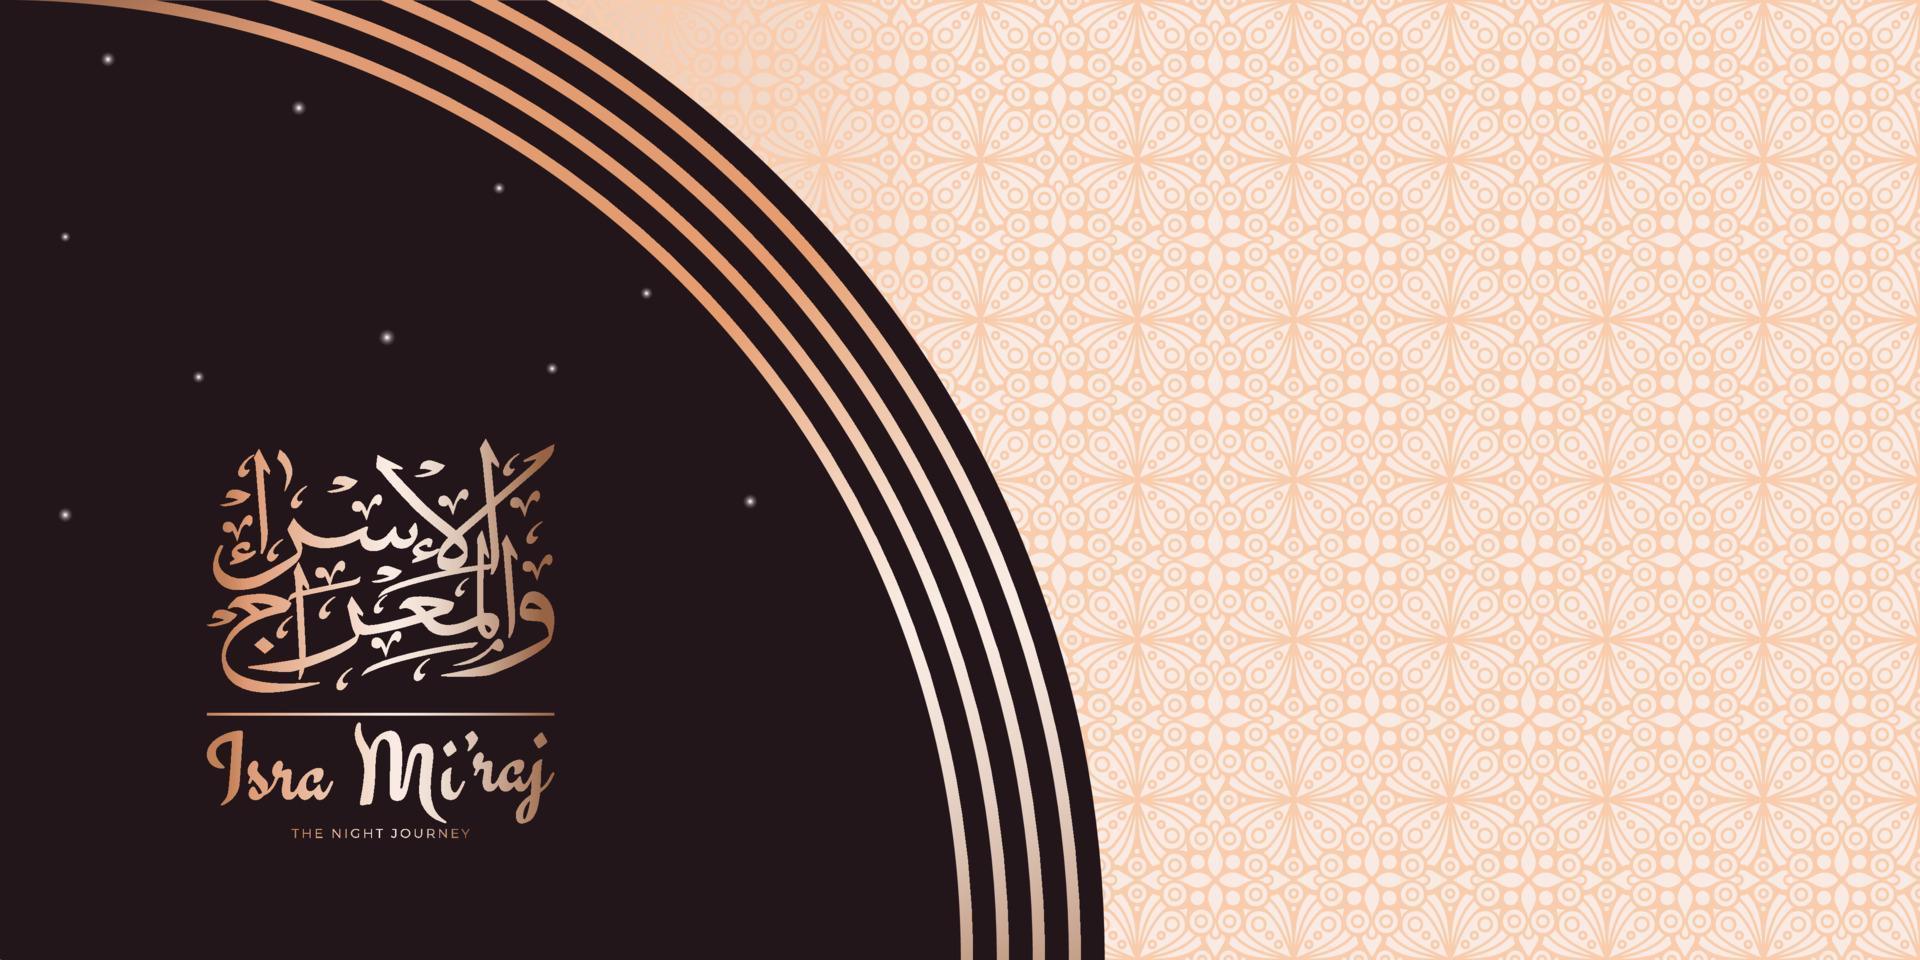 Al-Isra wal Mi'raj means The night journey of Prophet Muhammad. Islamic Background Design Template. Vector Illustration.